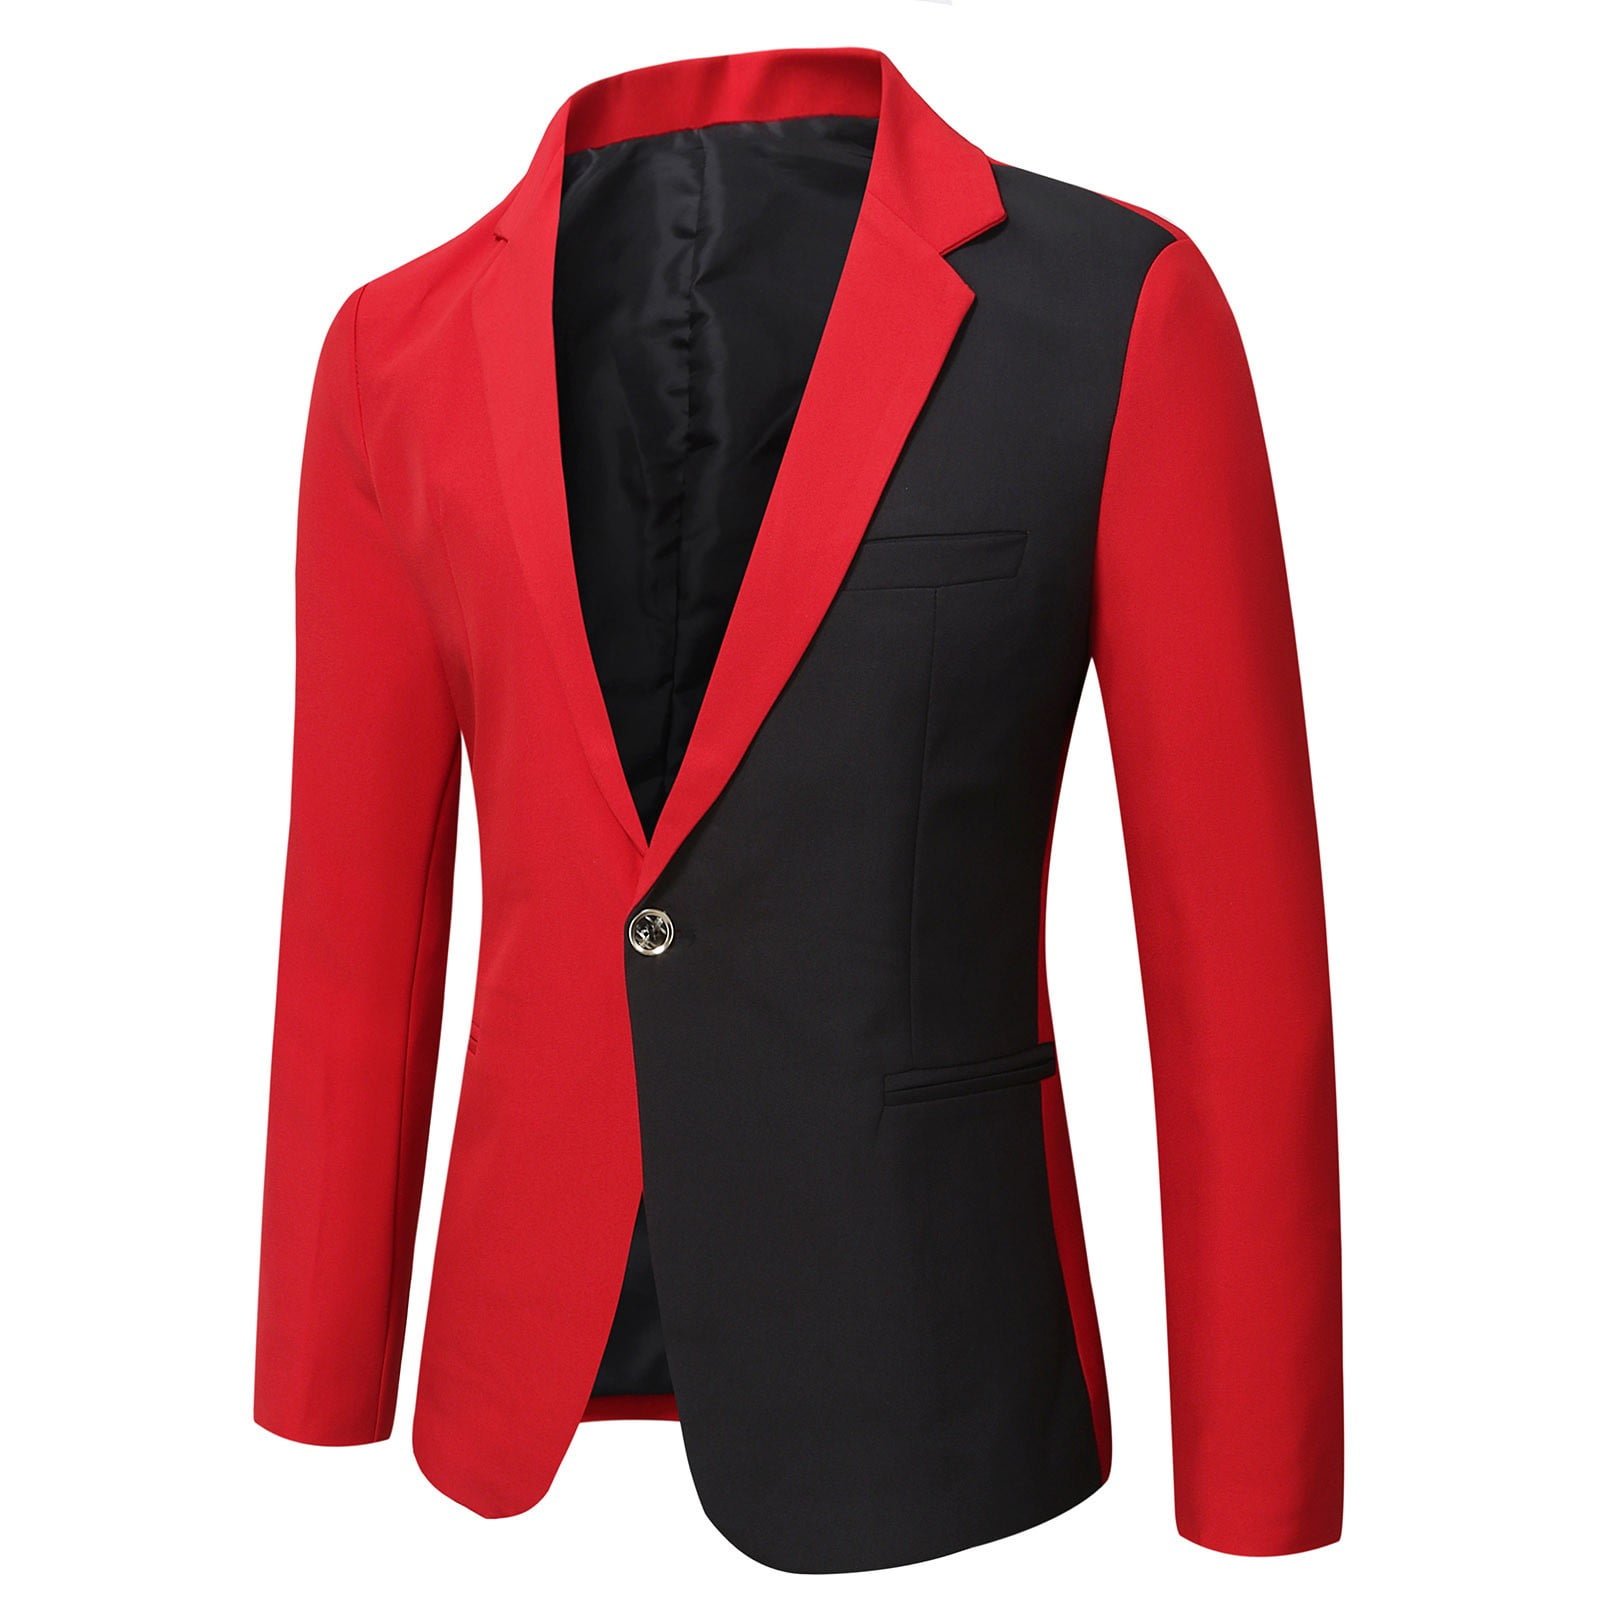 WREESH Mens Color Block Blazer Slim Business Suit Jacket Fashion Peaked  Lapel One Button Tuxedo Party Blazer Casual Sport Coat Red 